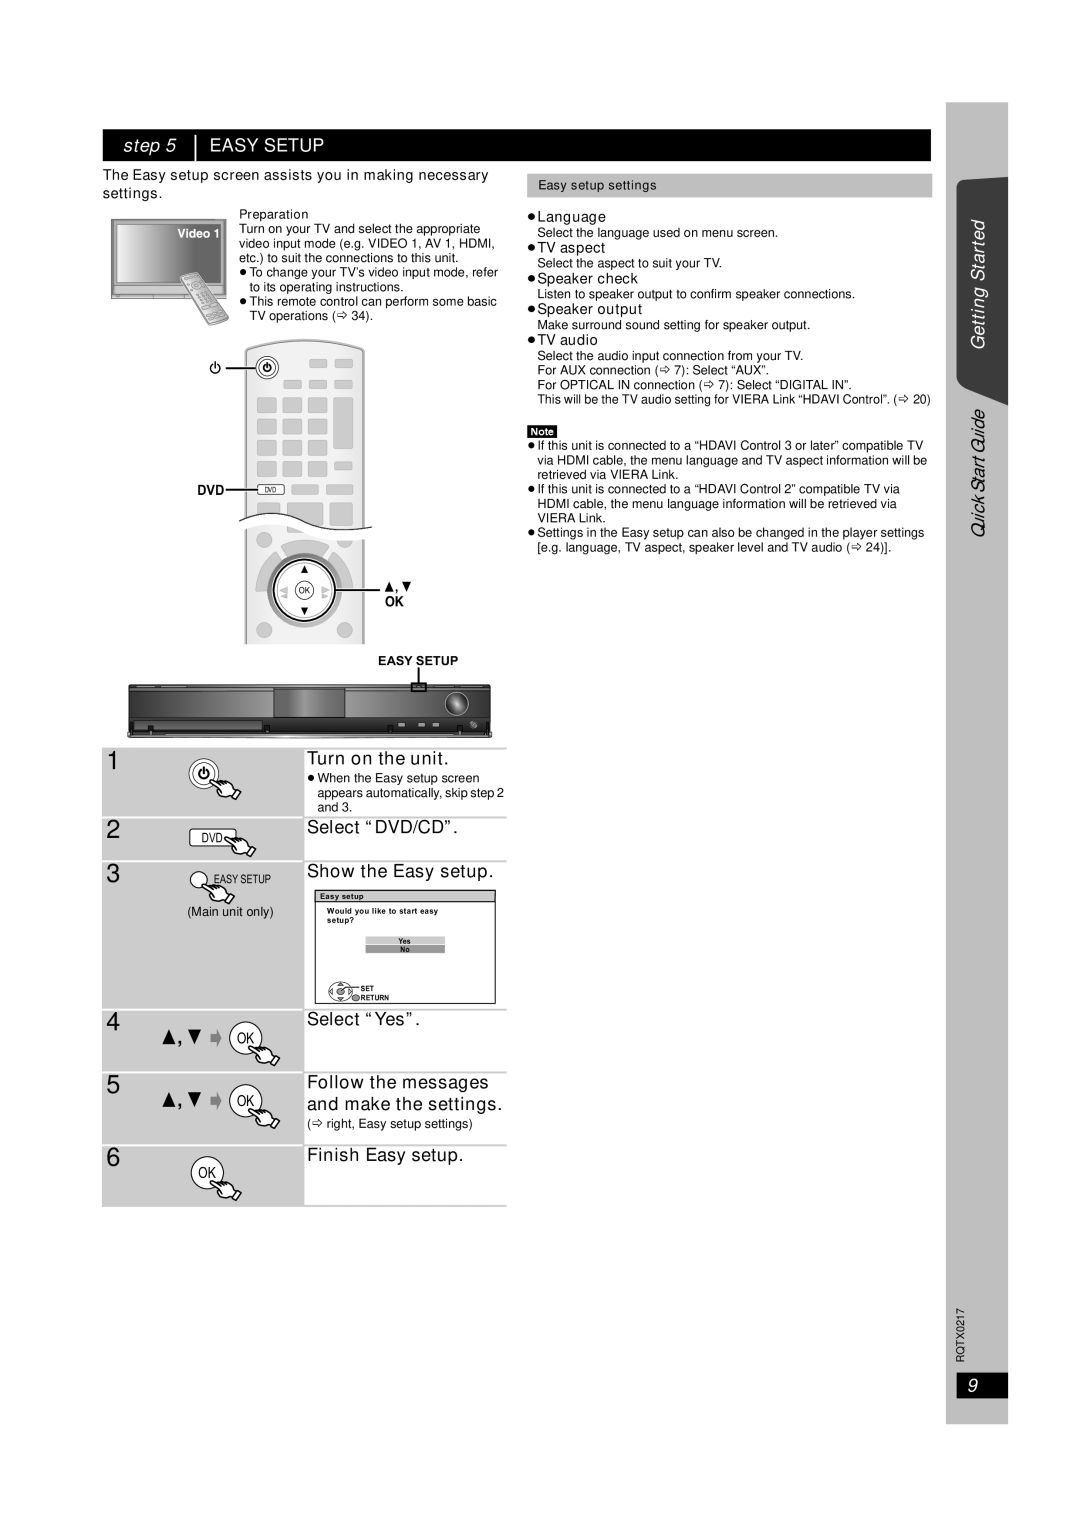 Panasonic SC-PT464 manual 1 2 3, Easy Setup, Turn on the unit, Select “DVD/CD” Show the Easy setup, Select “Yes” 